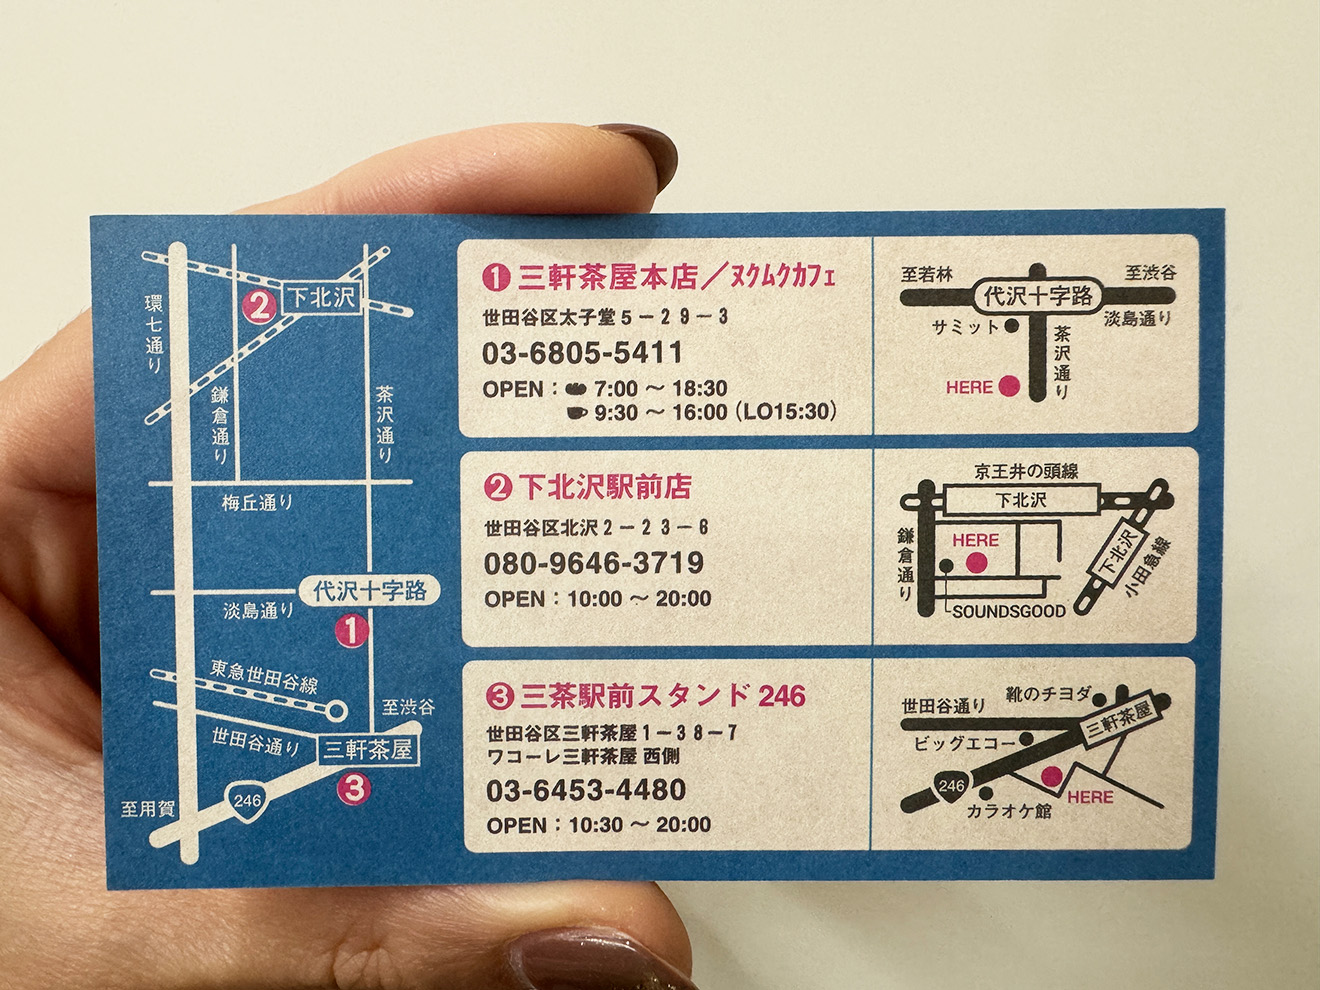 「nukumuku breadstore 下北沢駅前店」のショップカード